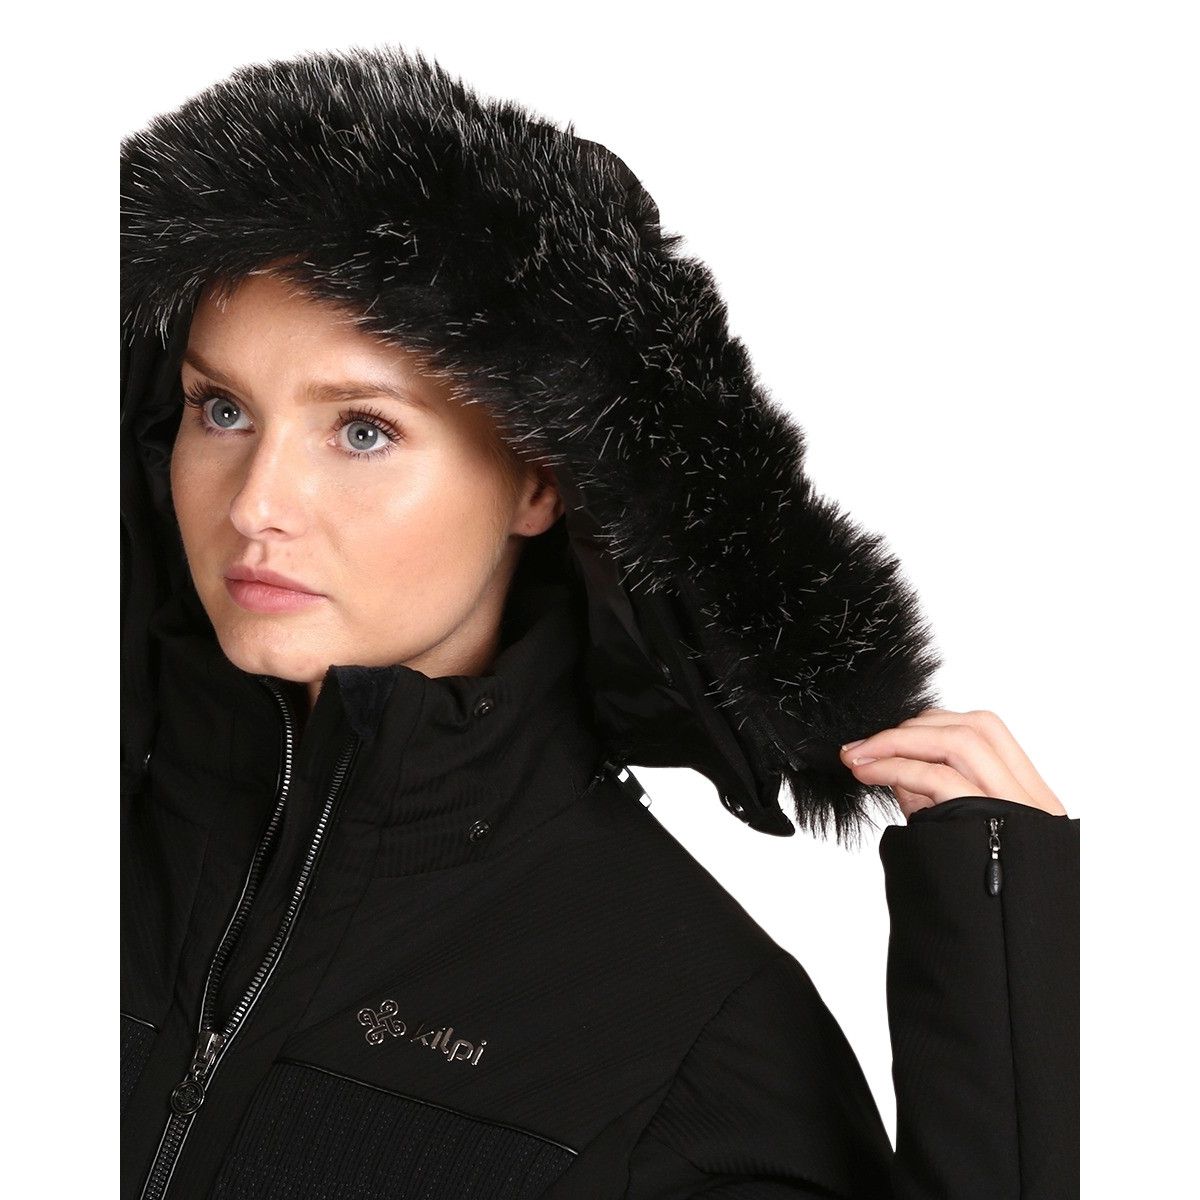 Kilpi Emilin, manteau de ski, femmes, noir